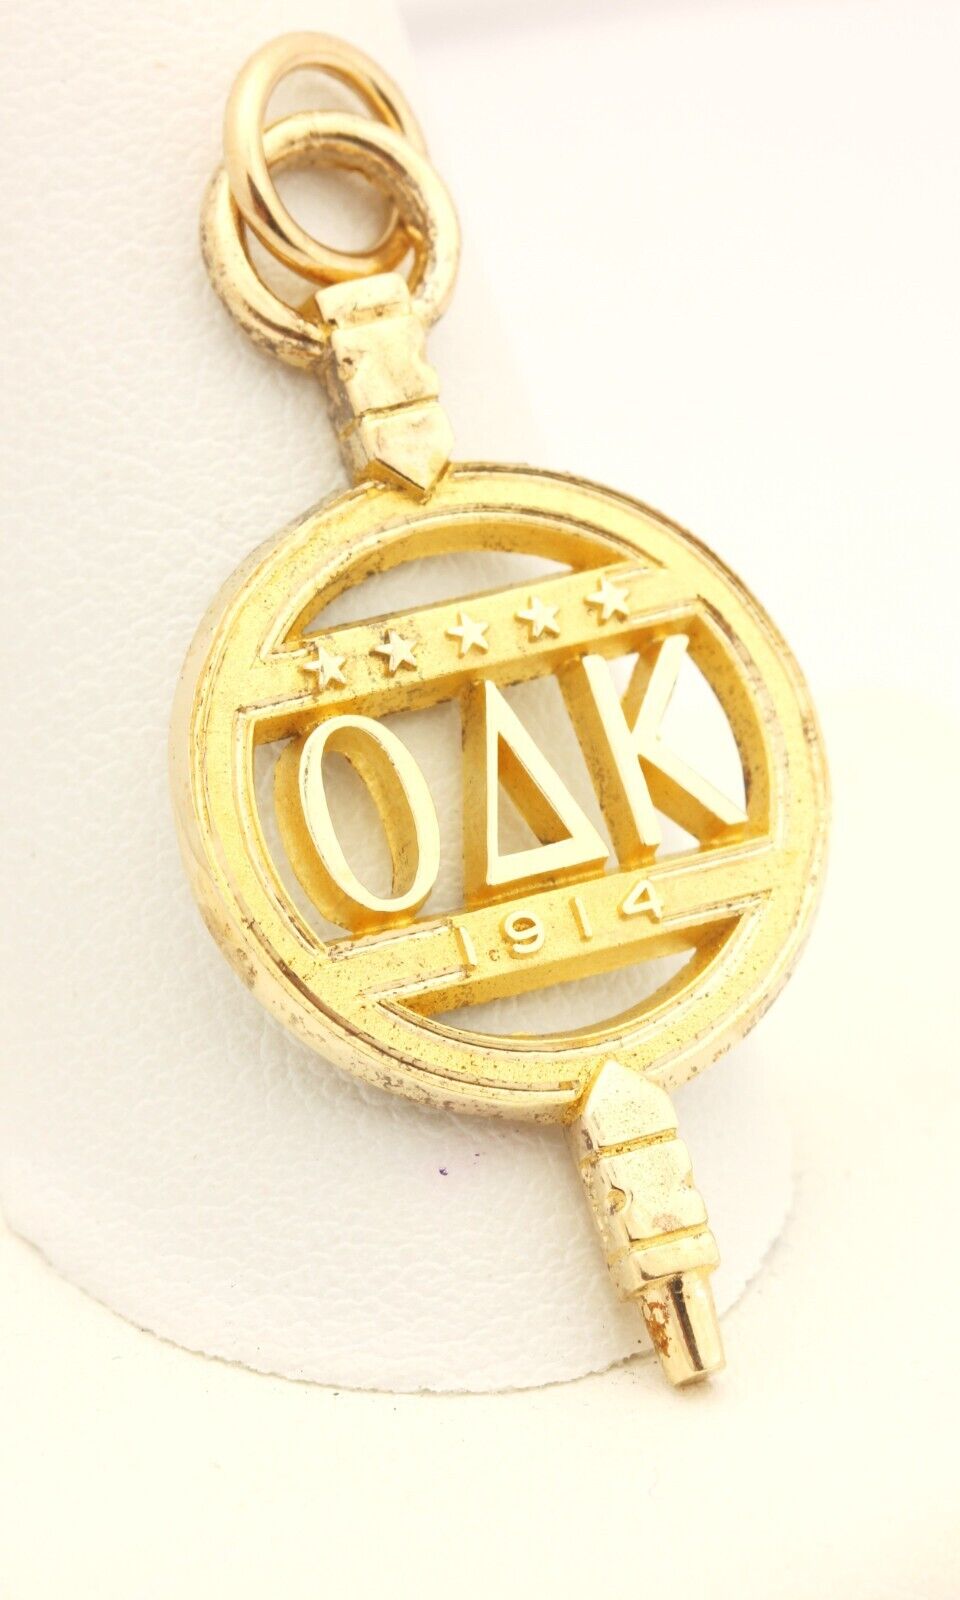 10k yellow gold college fraternity sorority pendant omicron Delta Kappa 4.42g